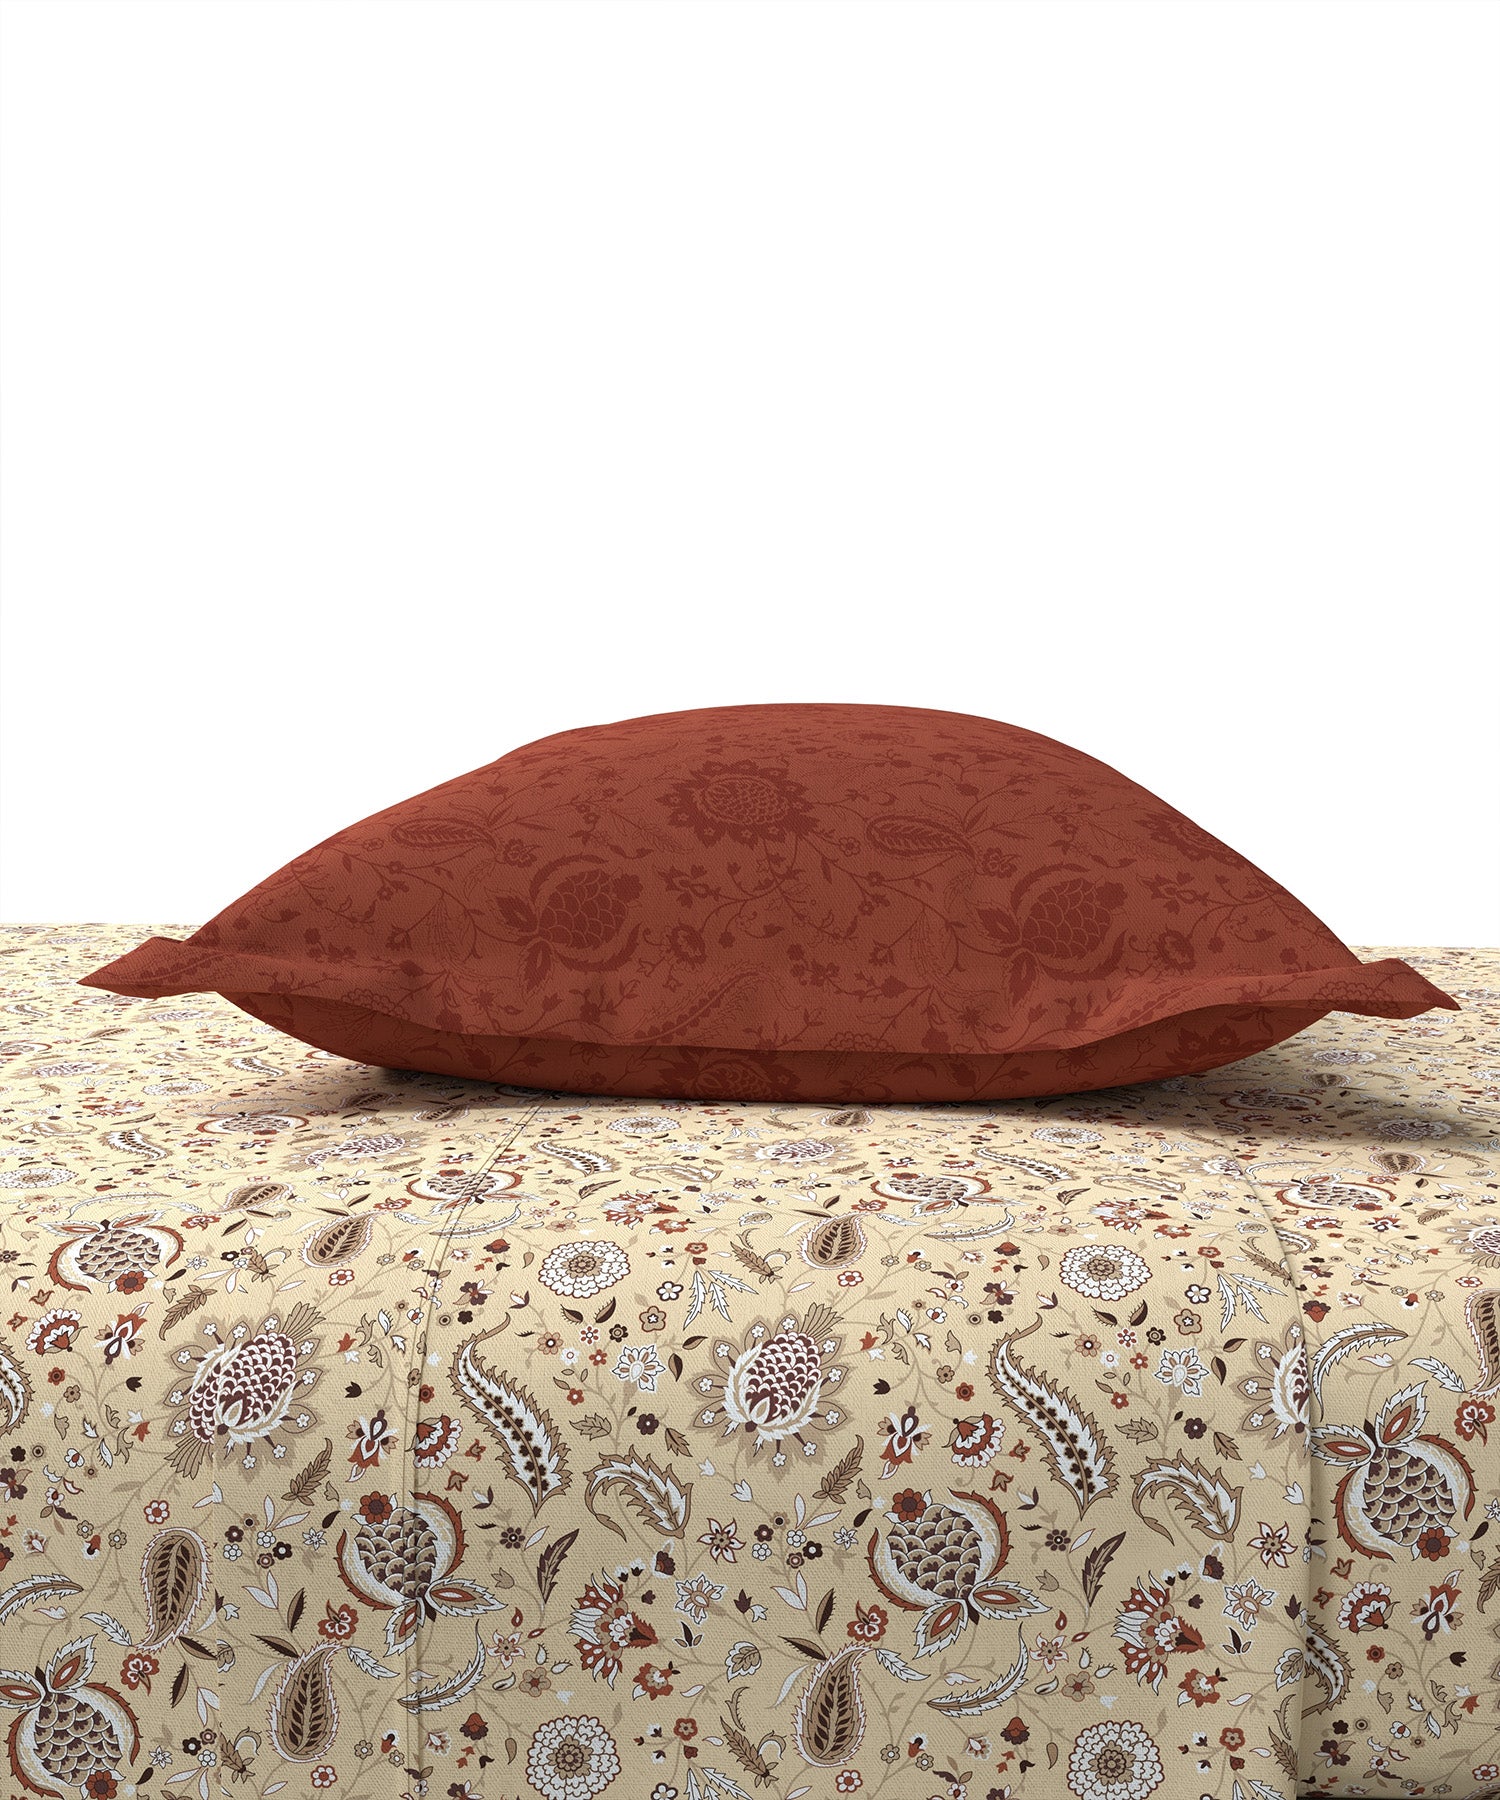 Single Size Bedsheet ₹719/-